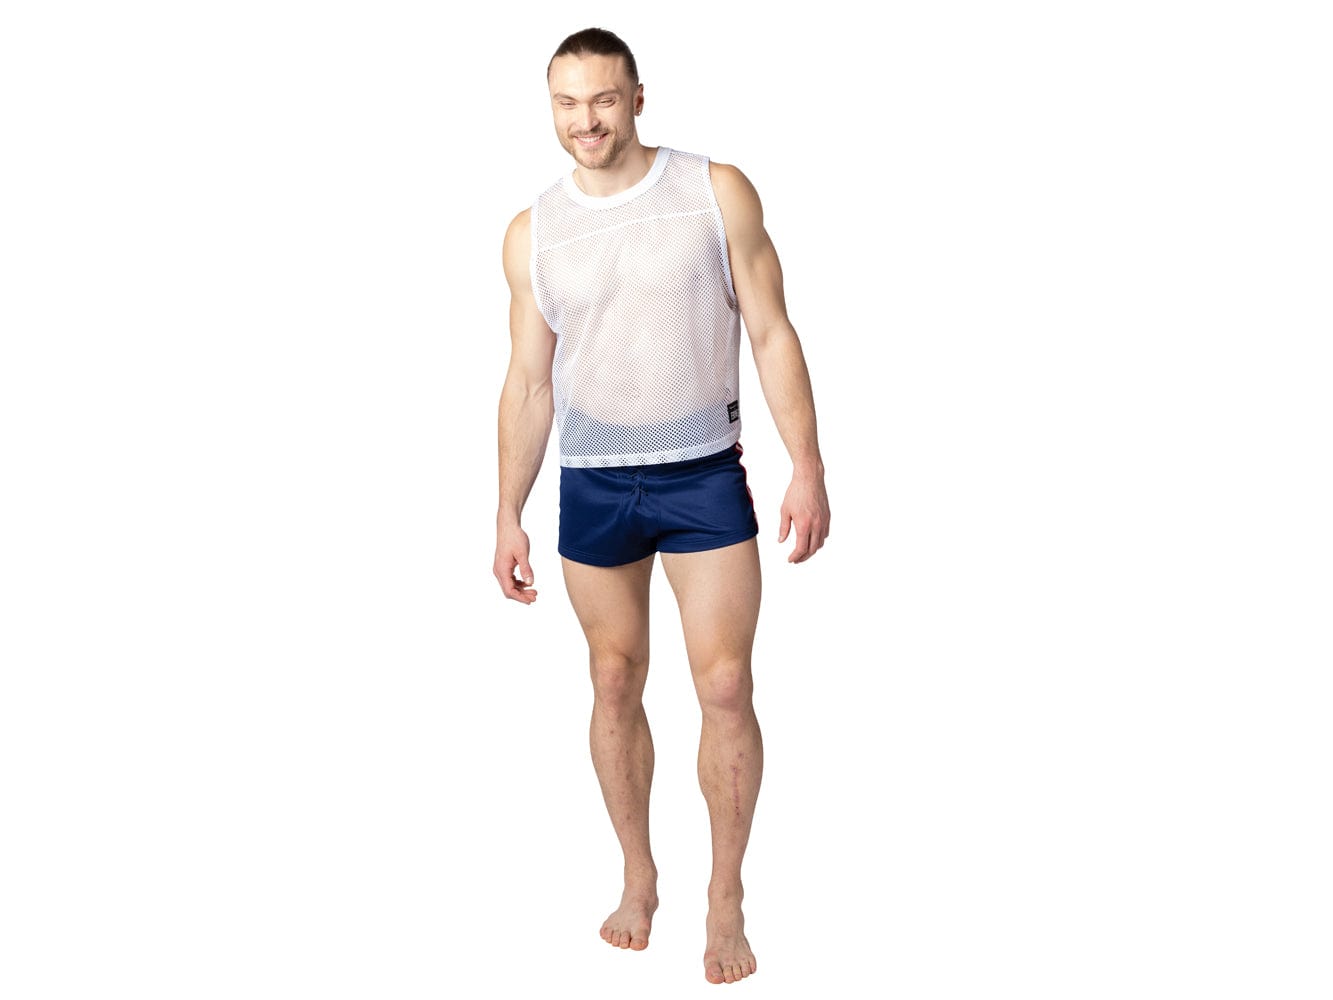 Man wearing white BIKE® sleeveless mesh shirt